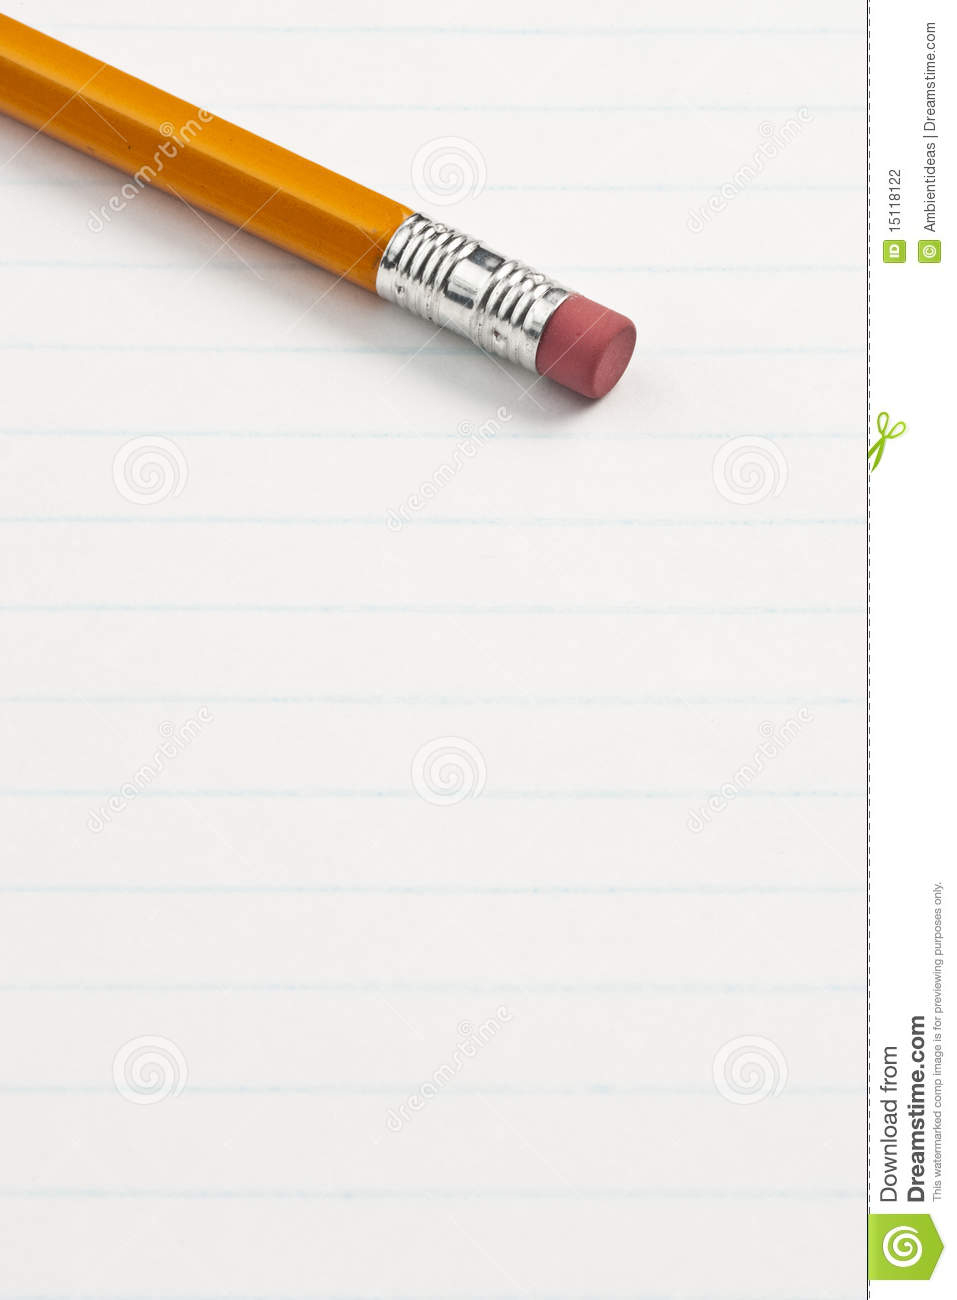 Eraser Pencil End On Note Pad Lined Paper  Focus On Eraser End Of    